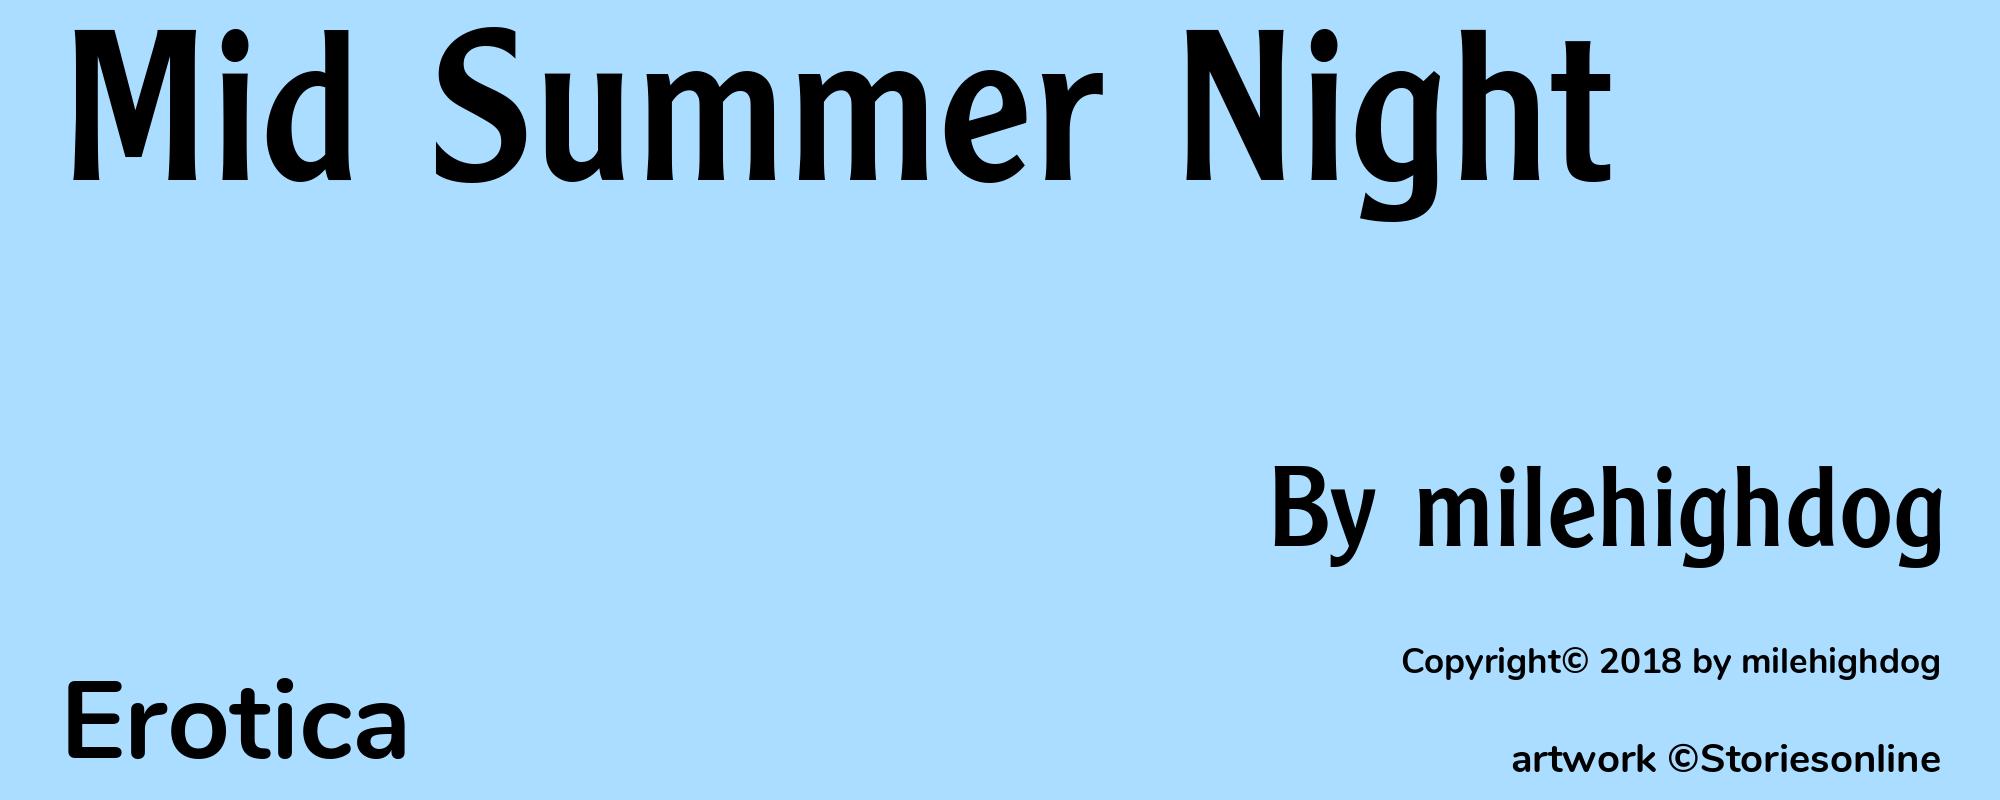 Mid Summer Night - Cover